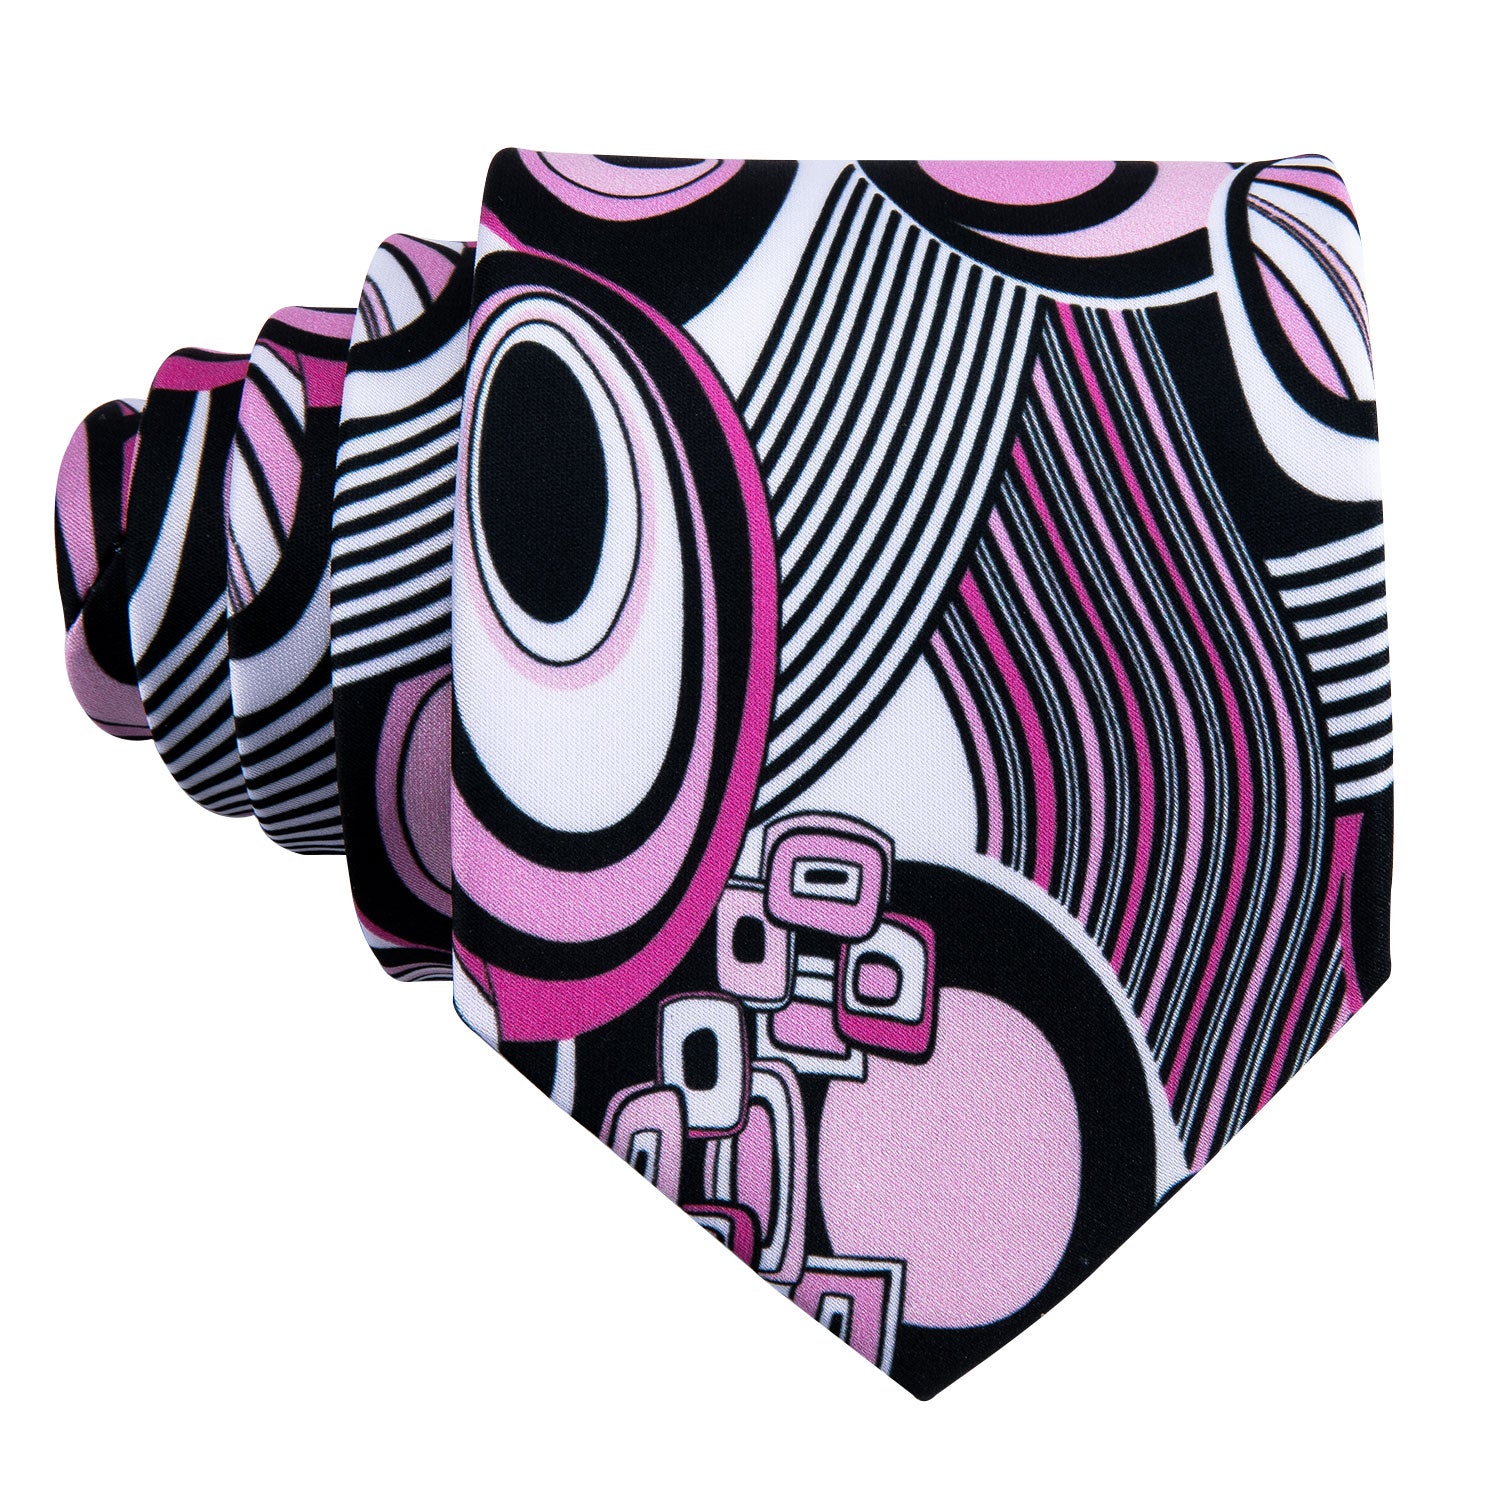 Novelty Geometric Pink Tie Pocket Square Cufflinks Set